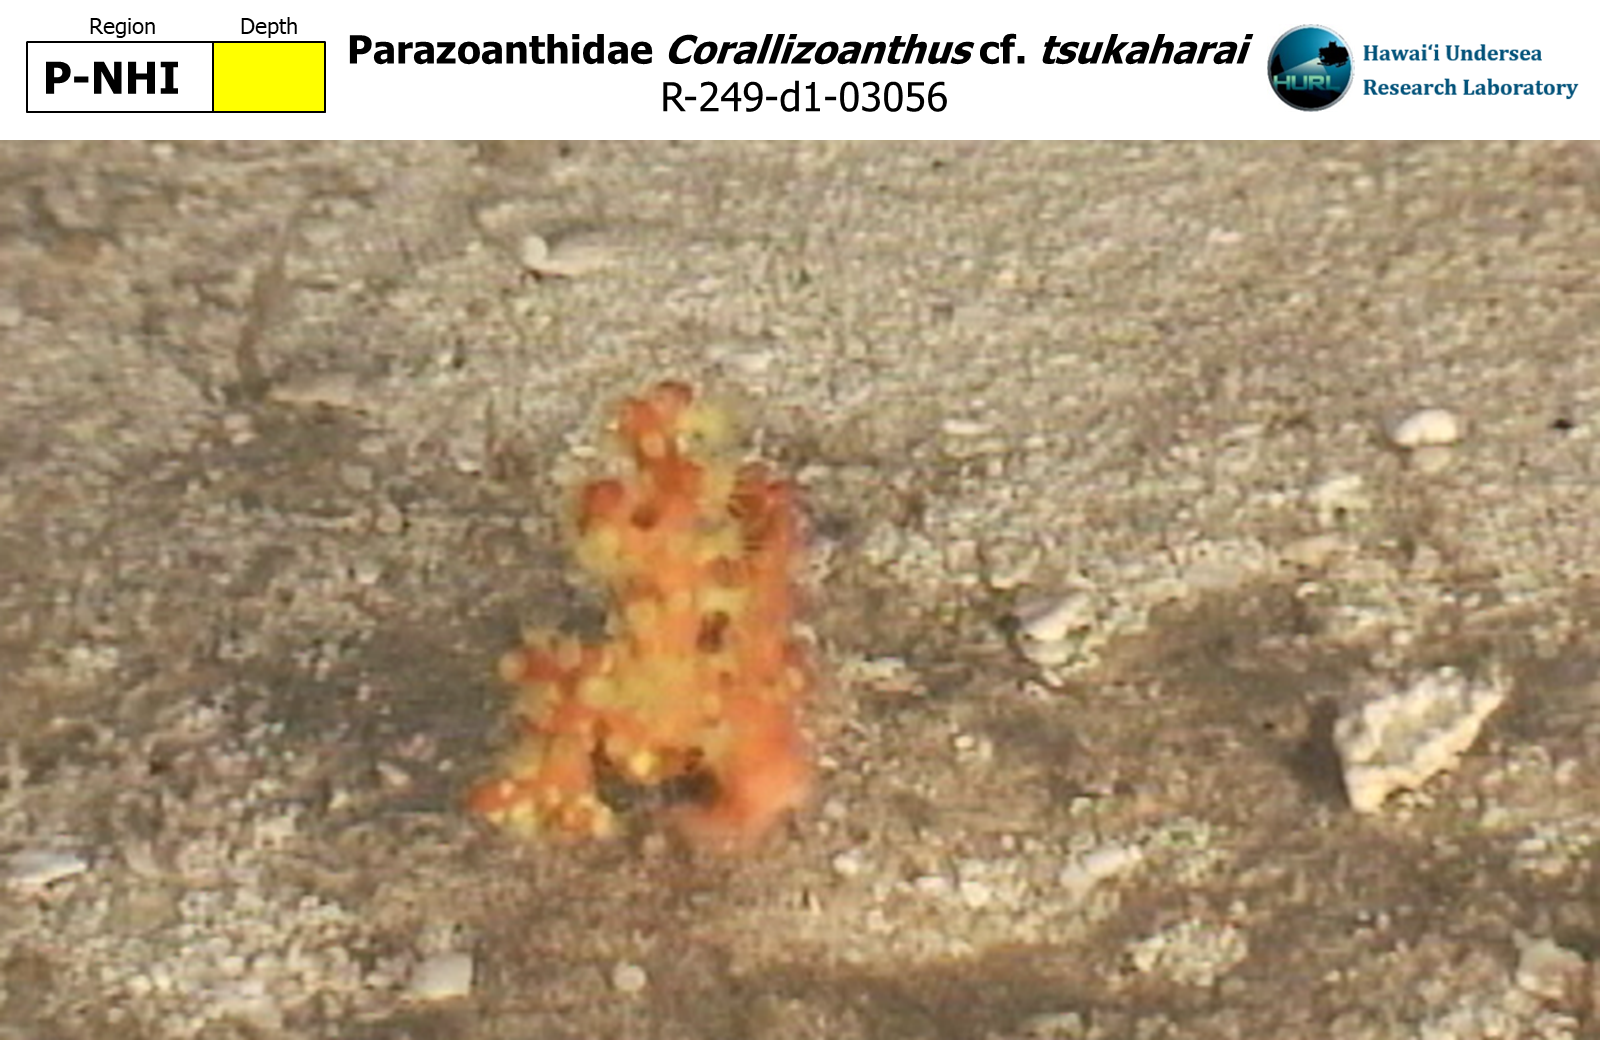 Corallizoanthus cf. tsukaharai